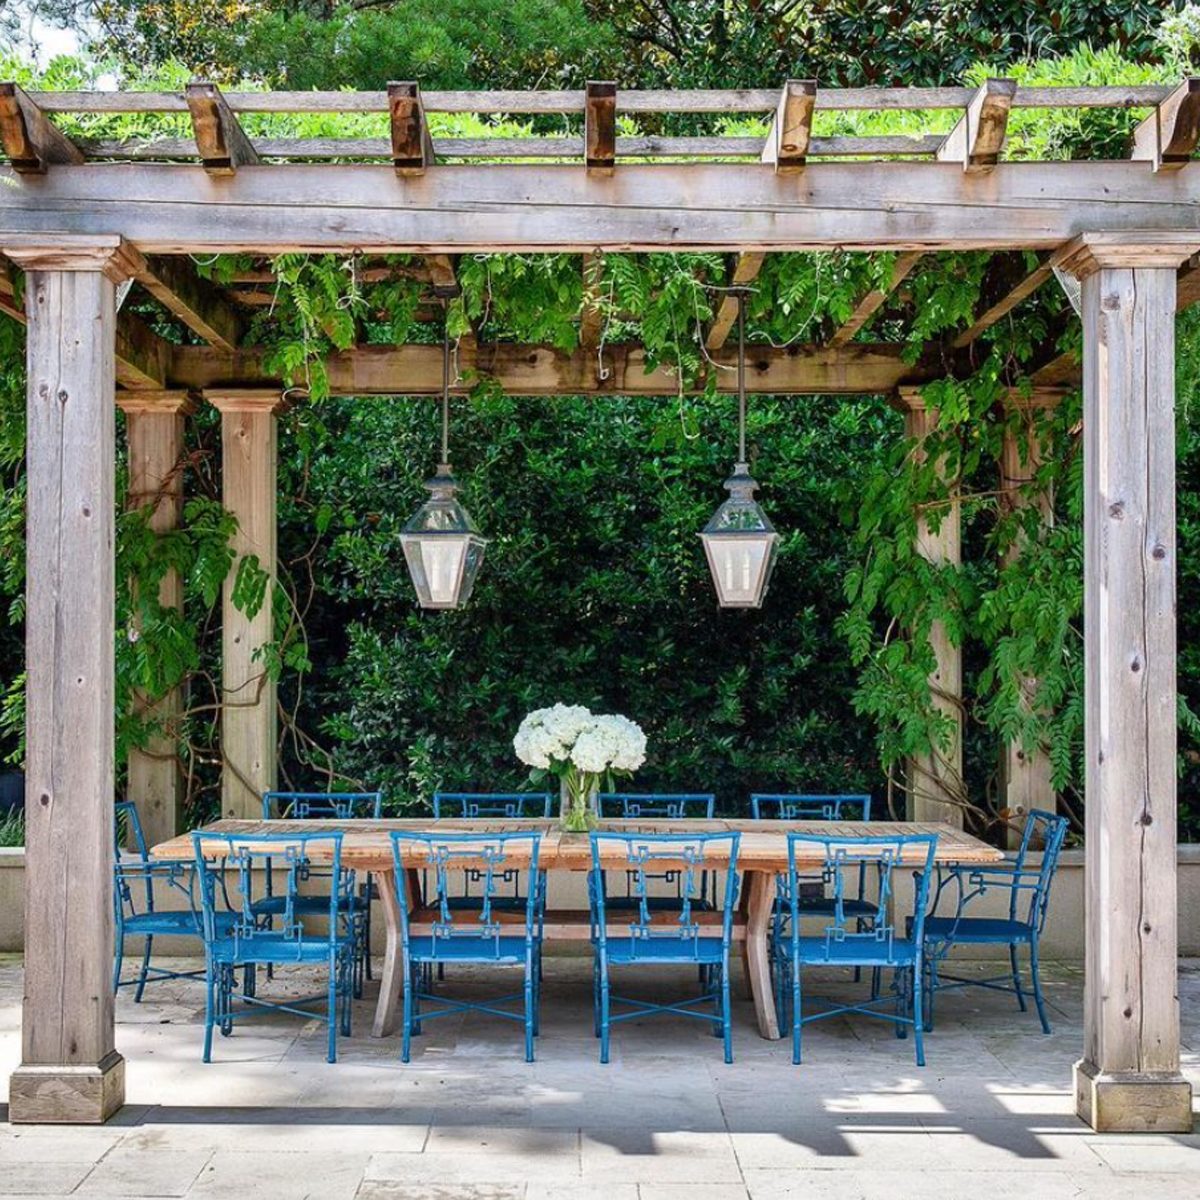 Outdoor Dining Chairs Courtesy Daighrick.la Photographer Caroline Allison Photography Instagram